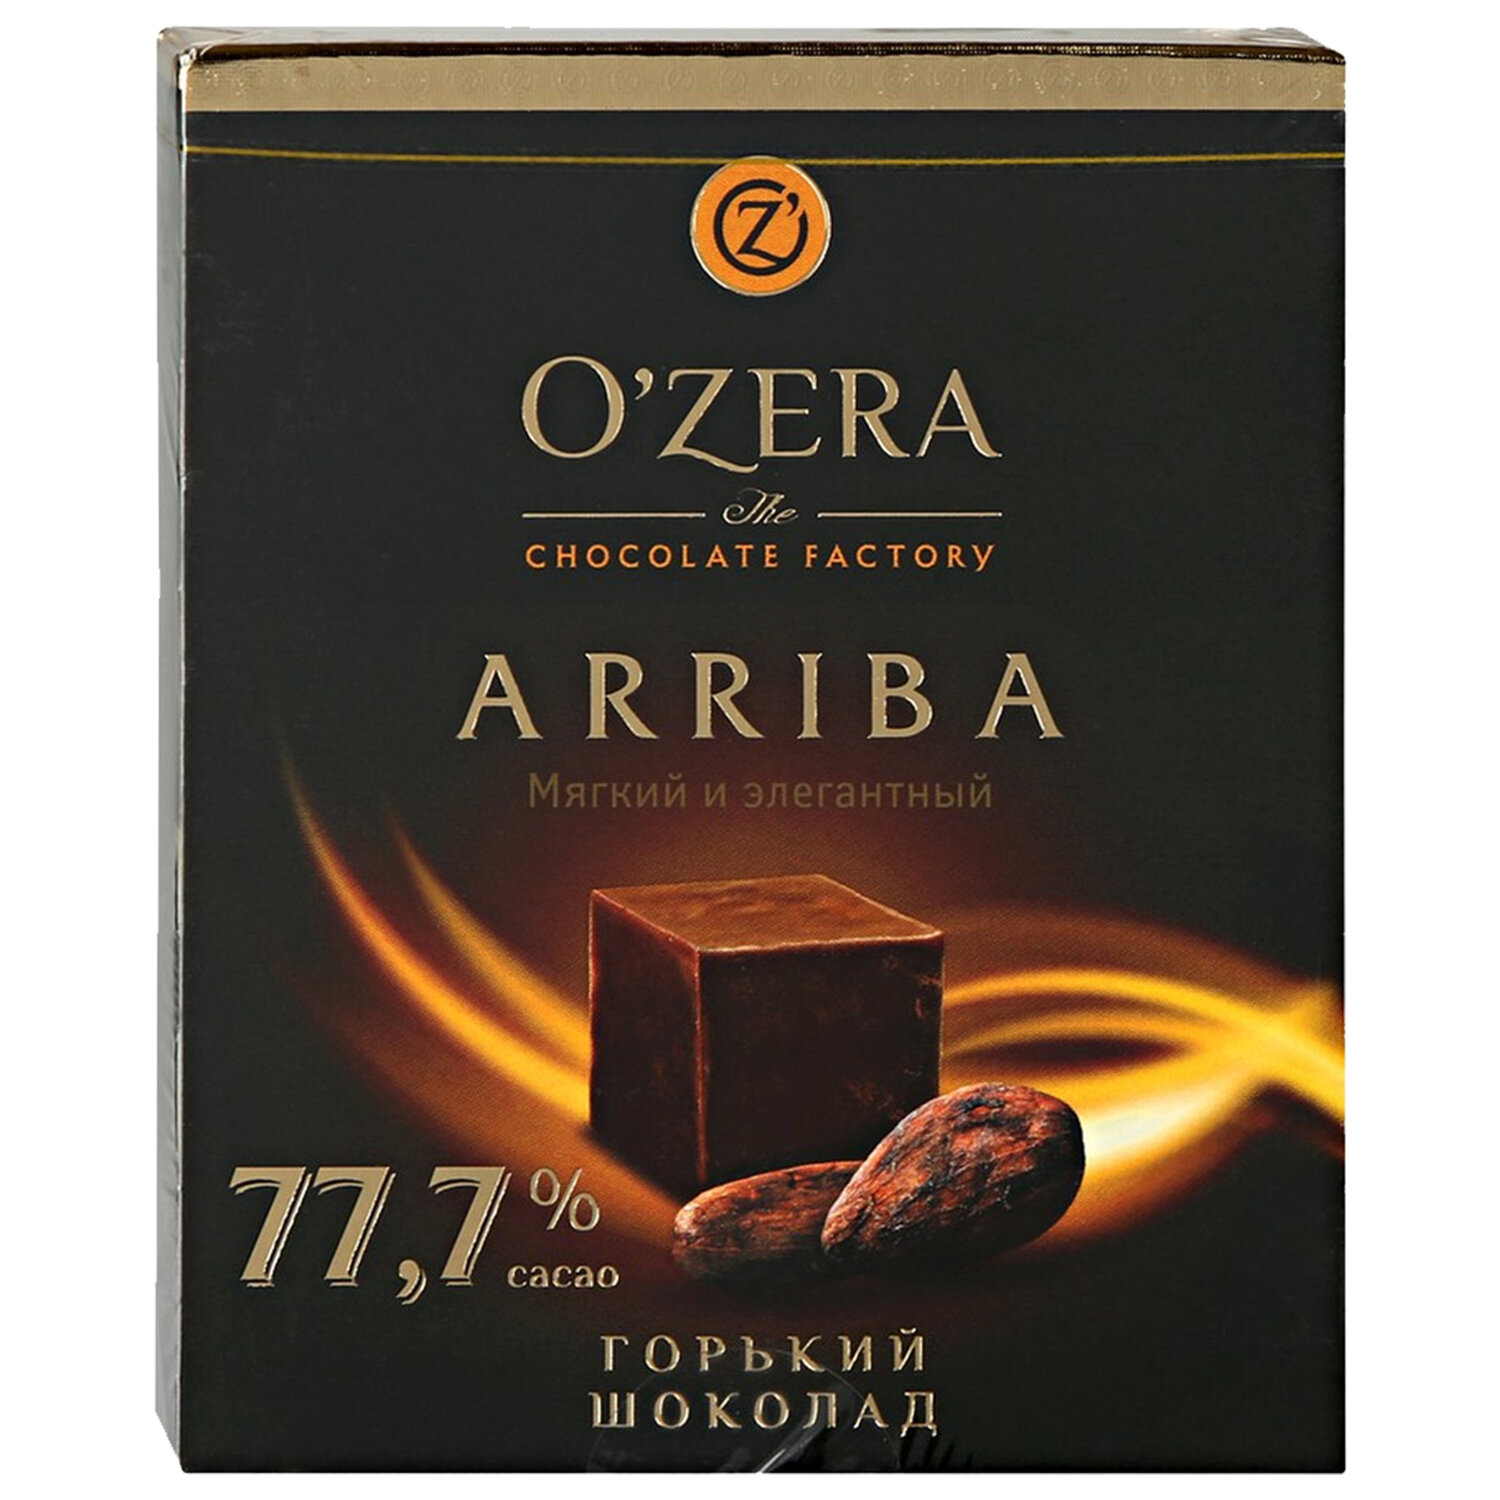 Zera шоколад. Шоколад, o`Zera arriba, 77.7%, 90г. O'Zera Горький шоколад 77.7. Шоколад Ozera arriba 77,7%. Шоколад «o'Zera» arriba Горький, 90 г.